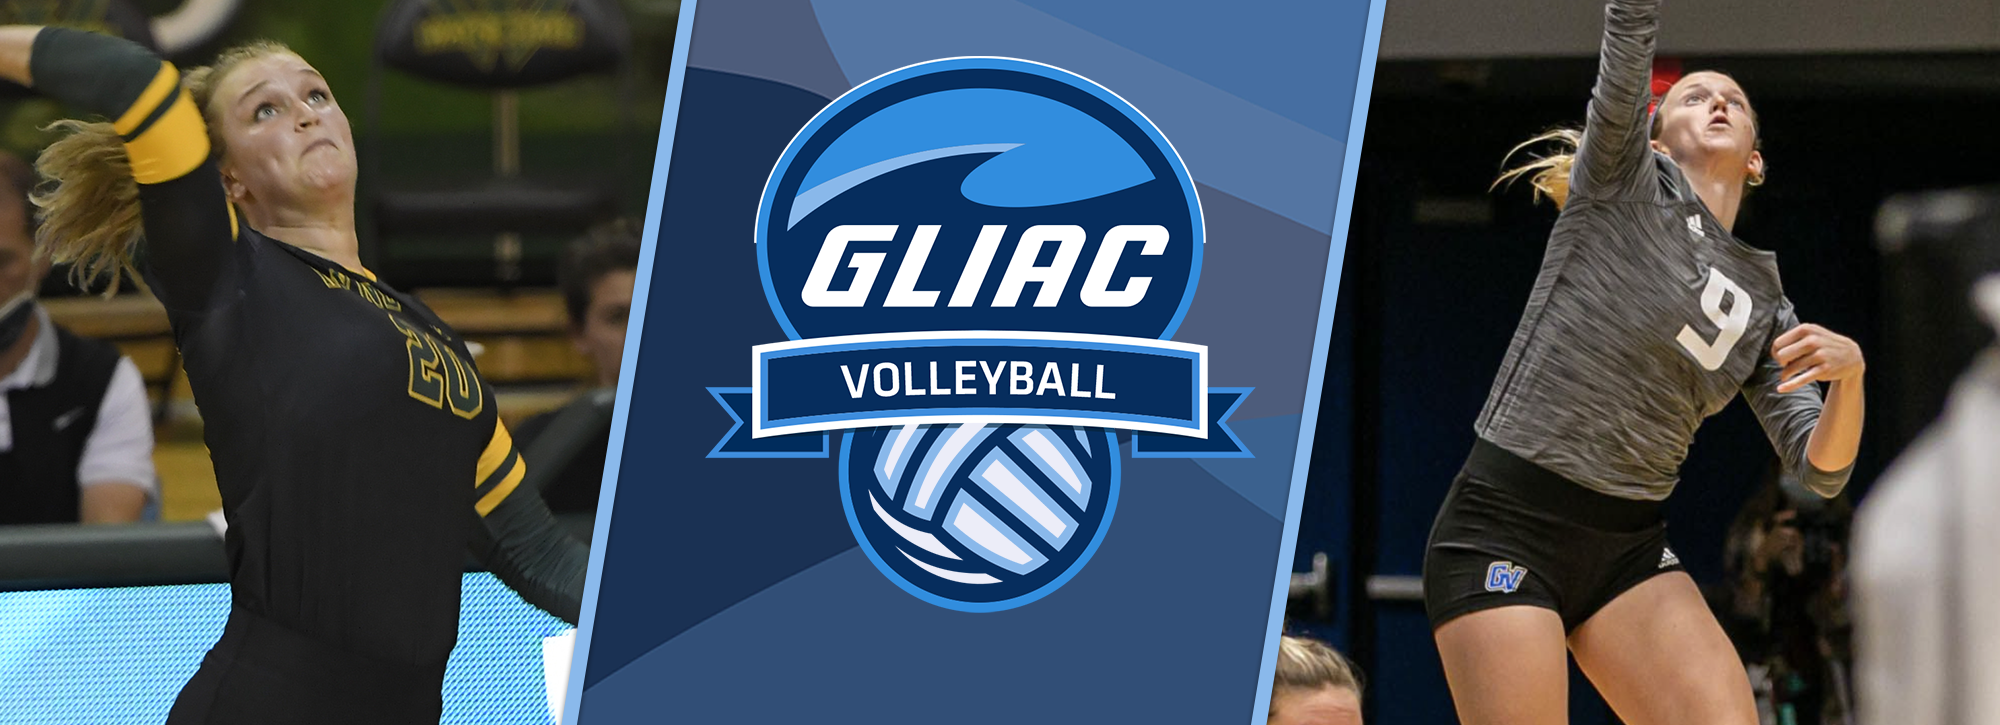 WSU's VanderWal and GVSU's Thompson awarded GLIAC volleyball players of the week honors